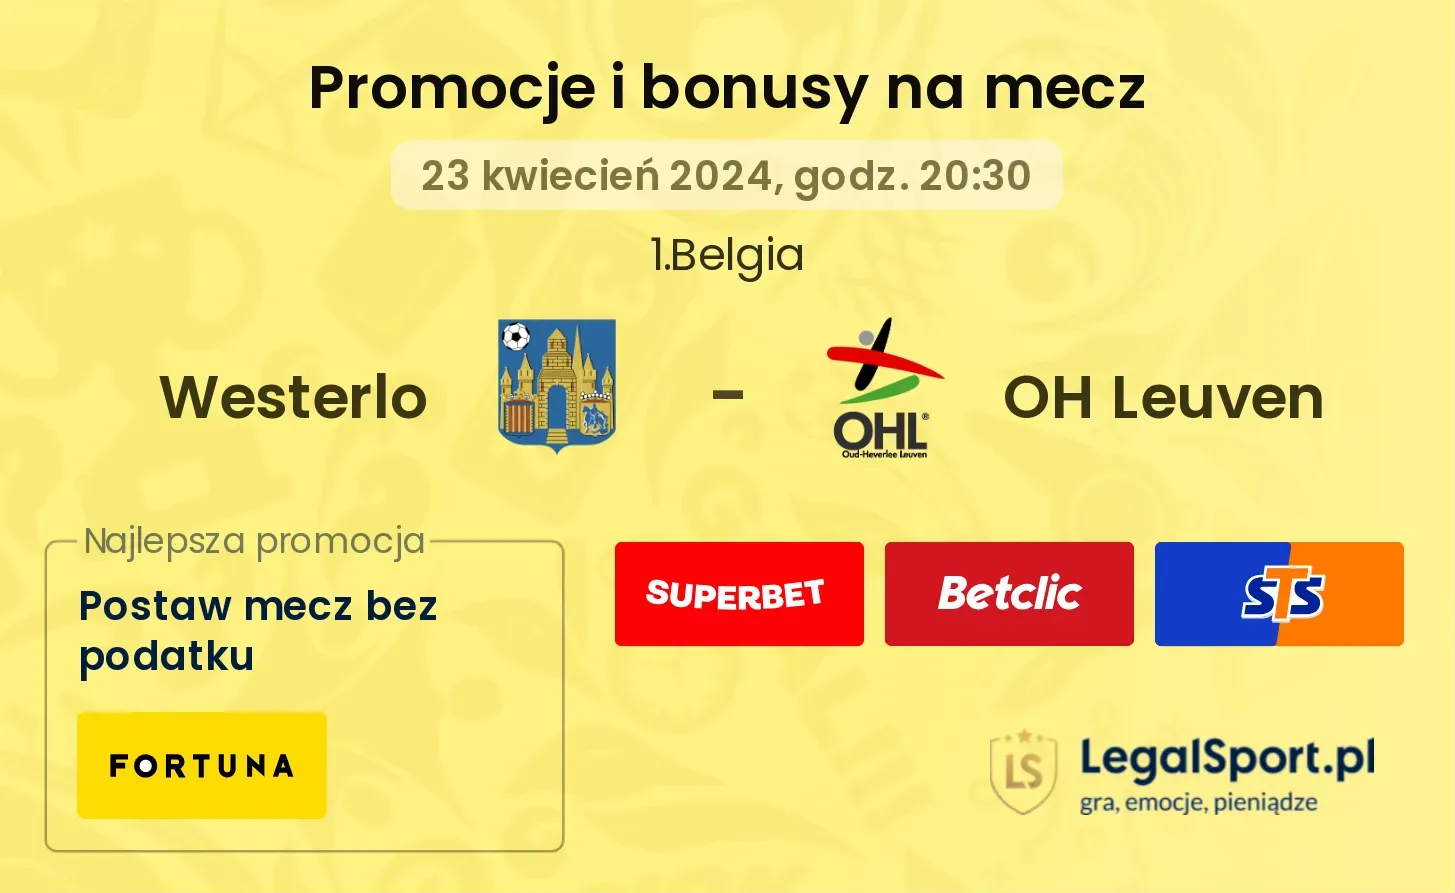 Westerlo - OH Leuven promocje bonusy na mecz